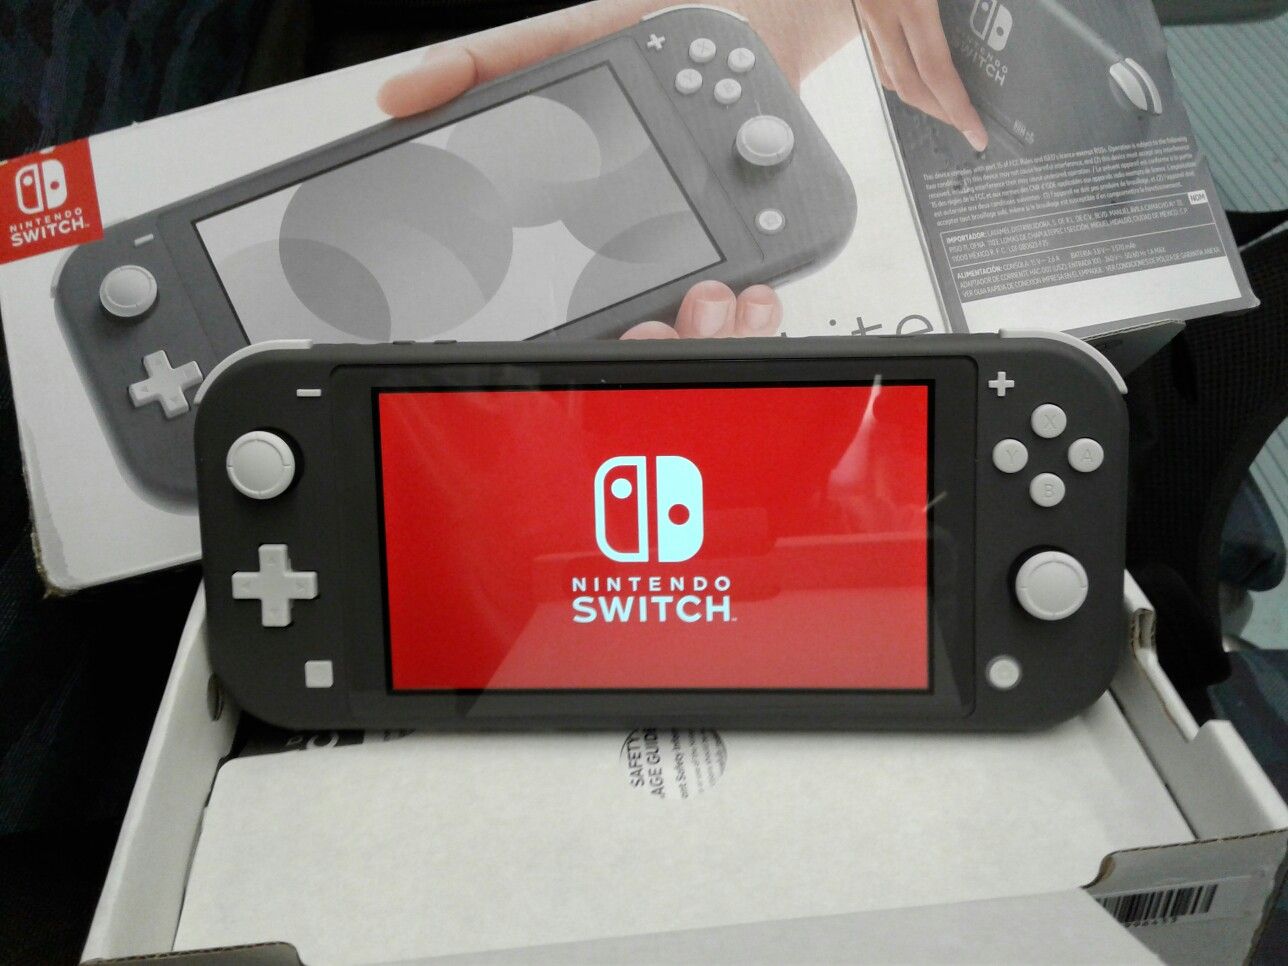 Brand new Nintendo Switch Lite